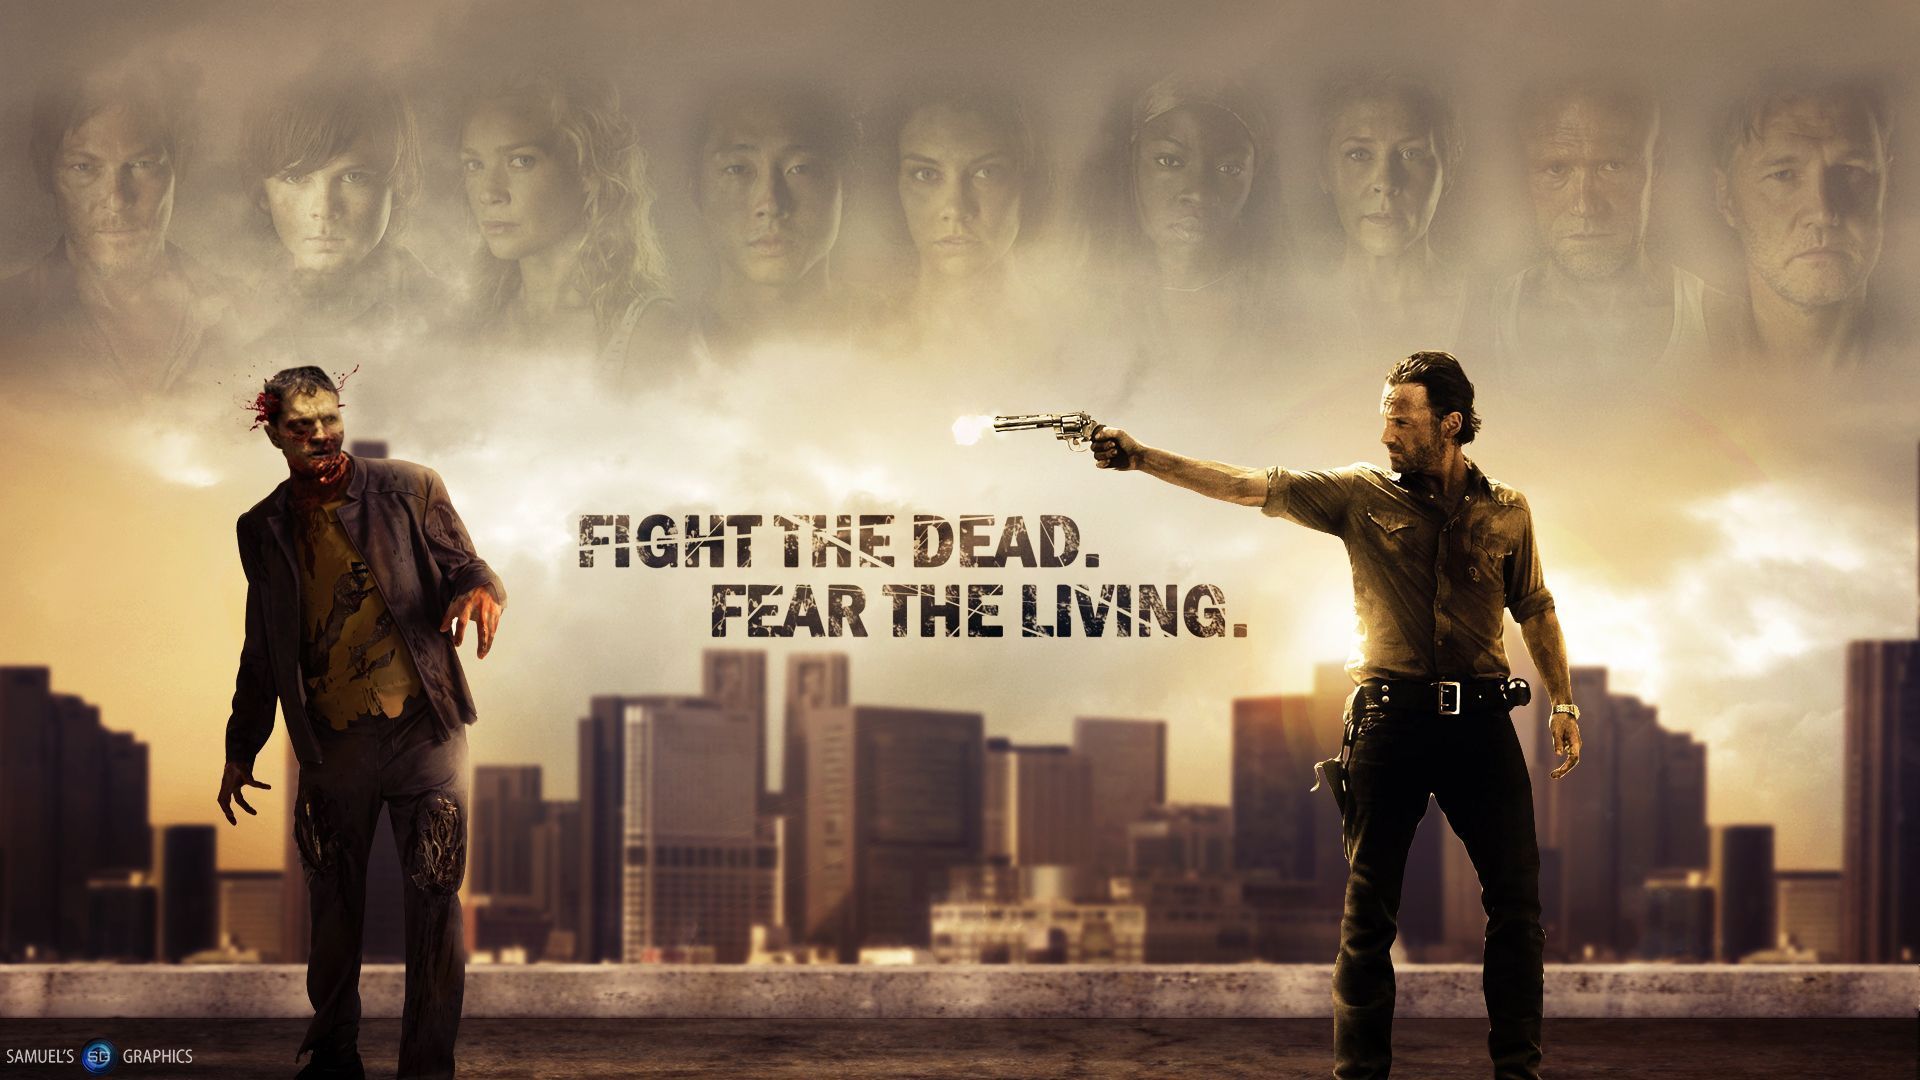 The Walking Dead Backgrounds